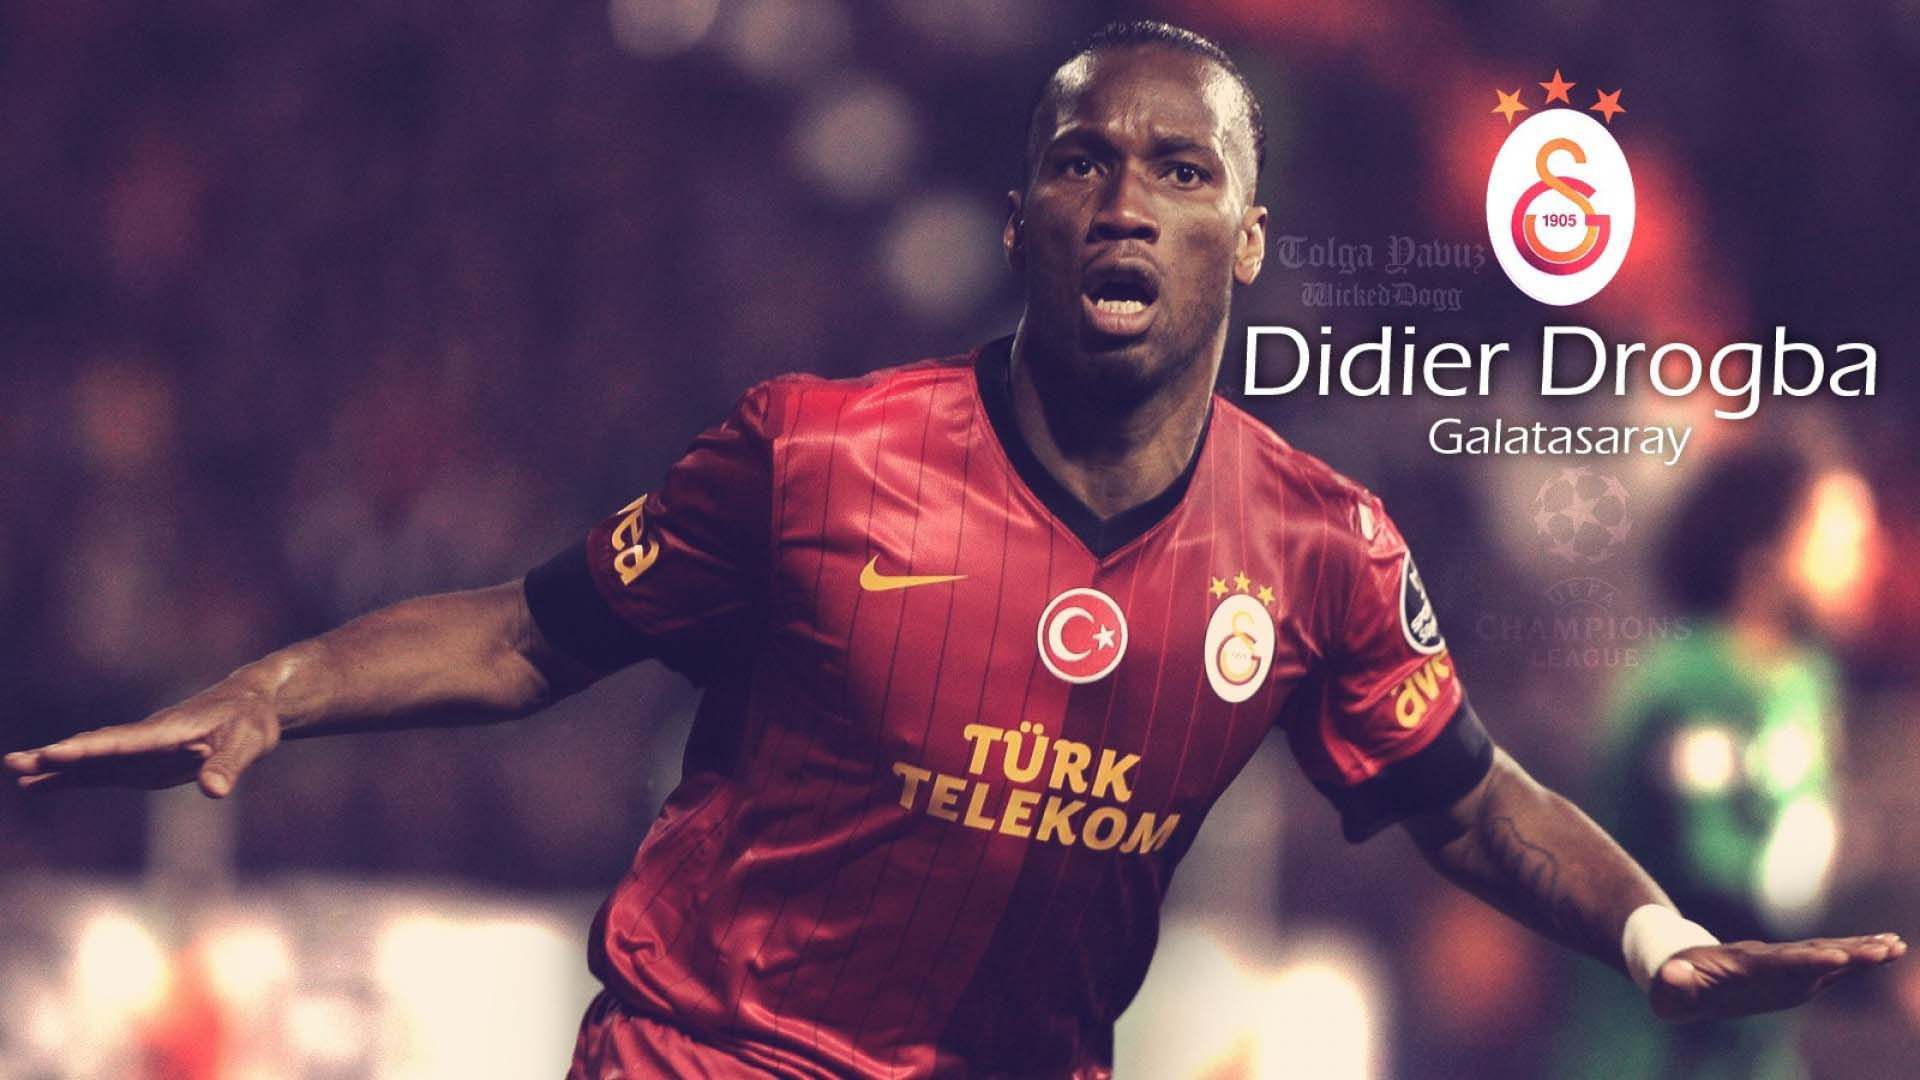 Sport Didier Drogba Galatasaray Wallpaper 1920x1080 PC Wallpaper